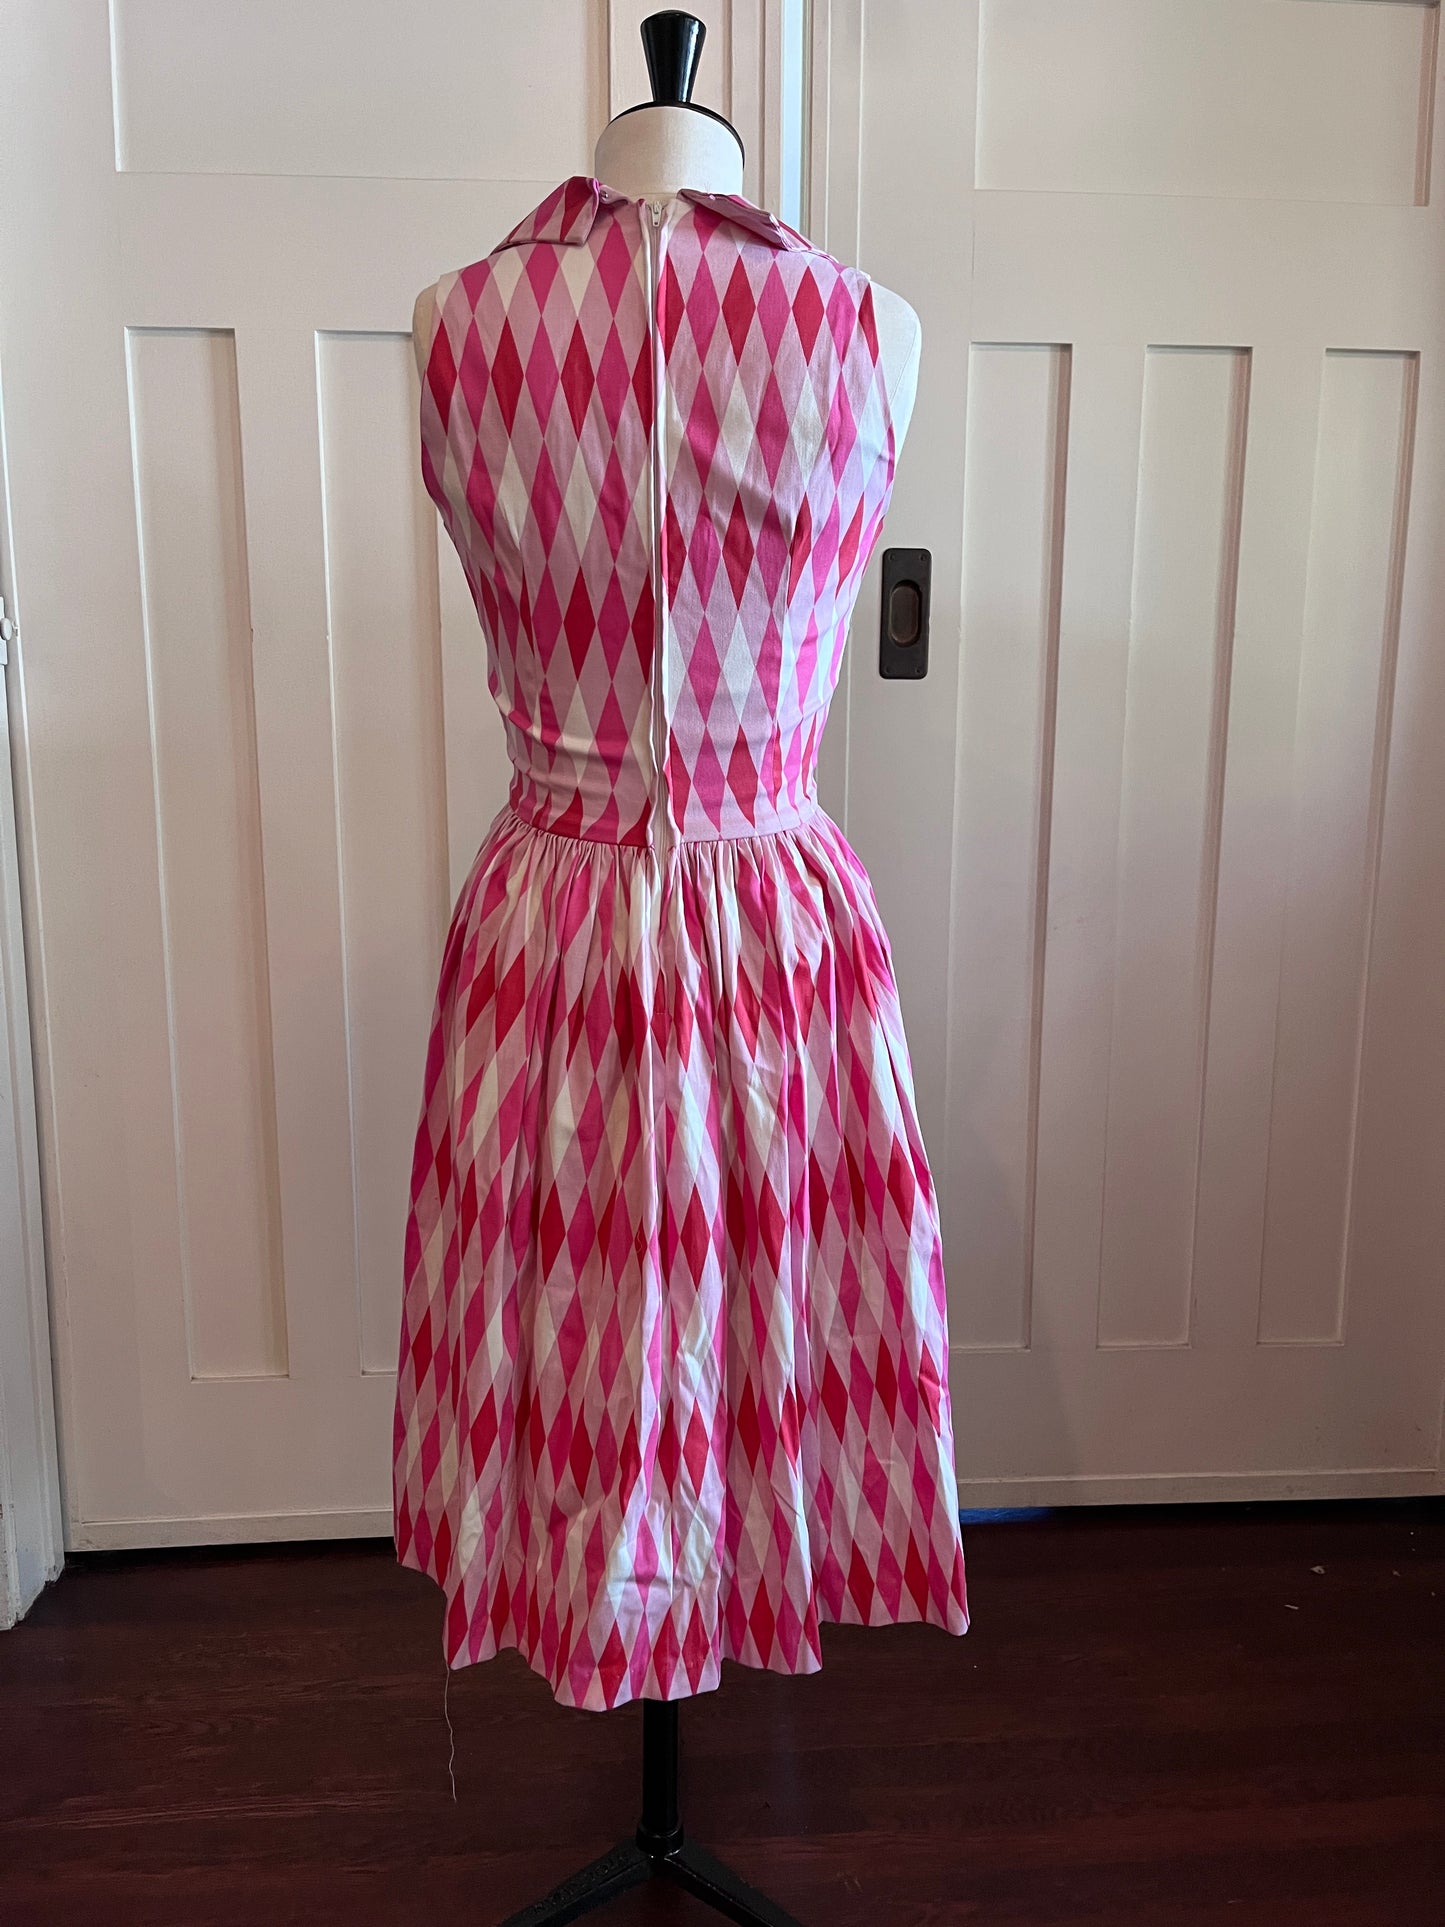 Sleeveless Edie Dress in Valentine Harlequin - ORIGINAL SAMPLE